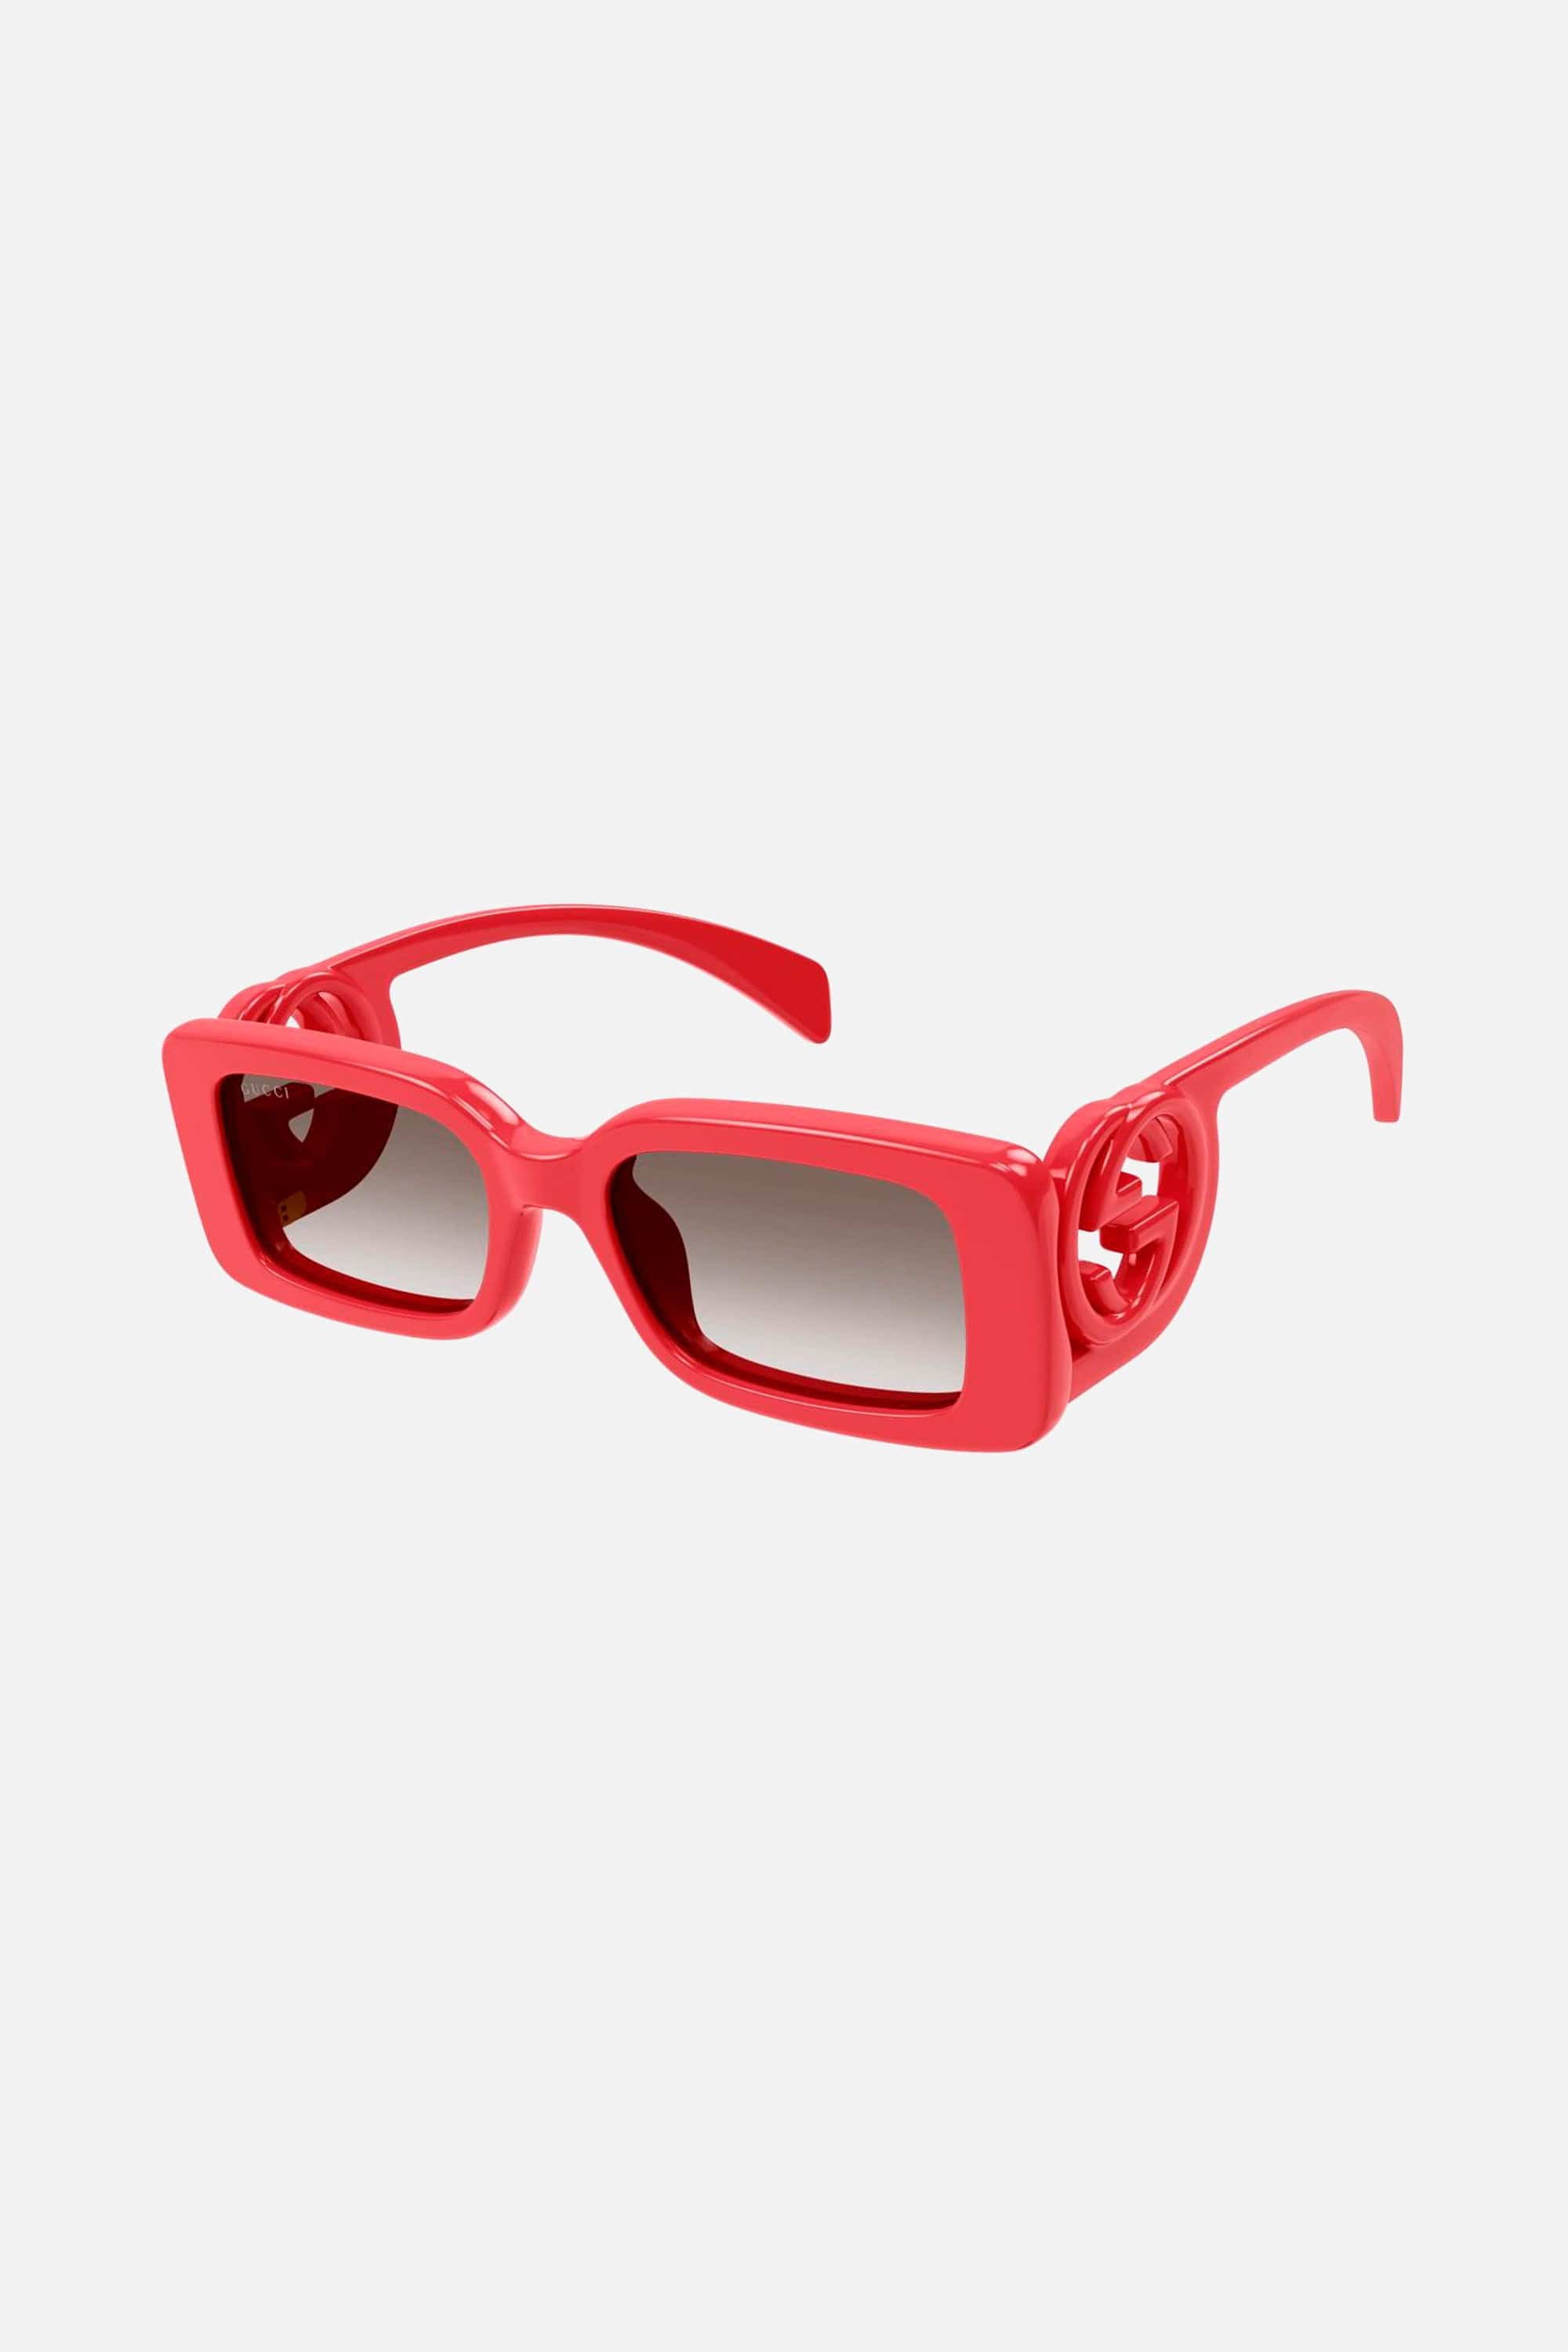 Gucci red bold rectangular sunglasses - Eyewear Club